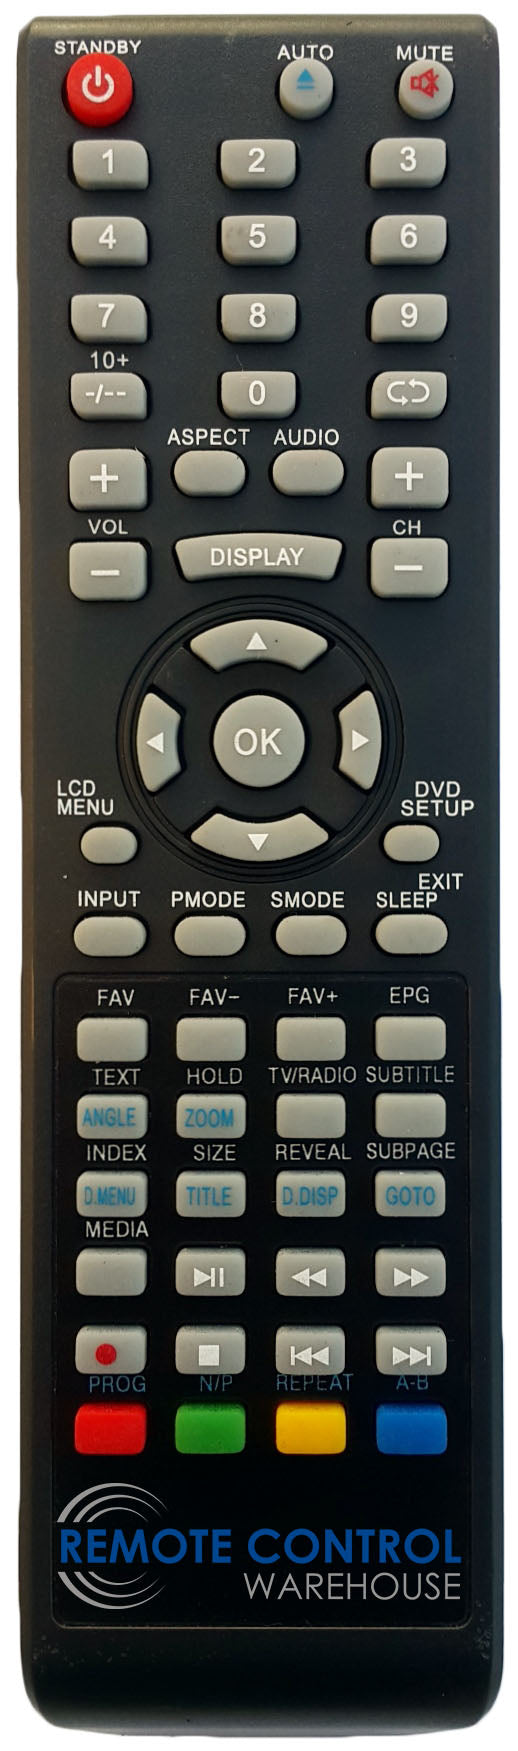 TECO LED24JFRDHU LCD TV REPLACEMENT REMOTE CONTROL